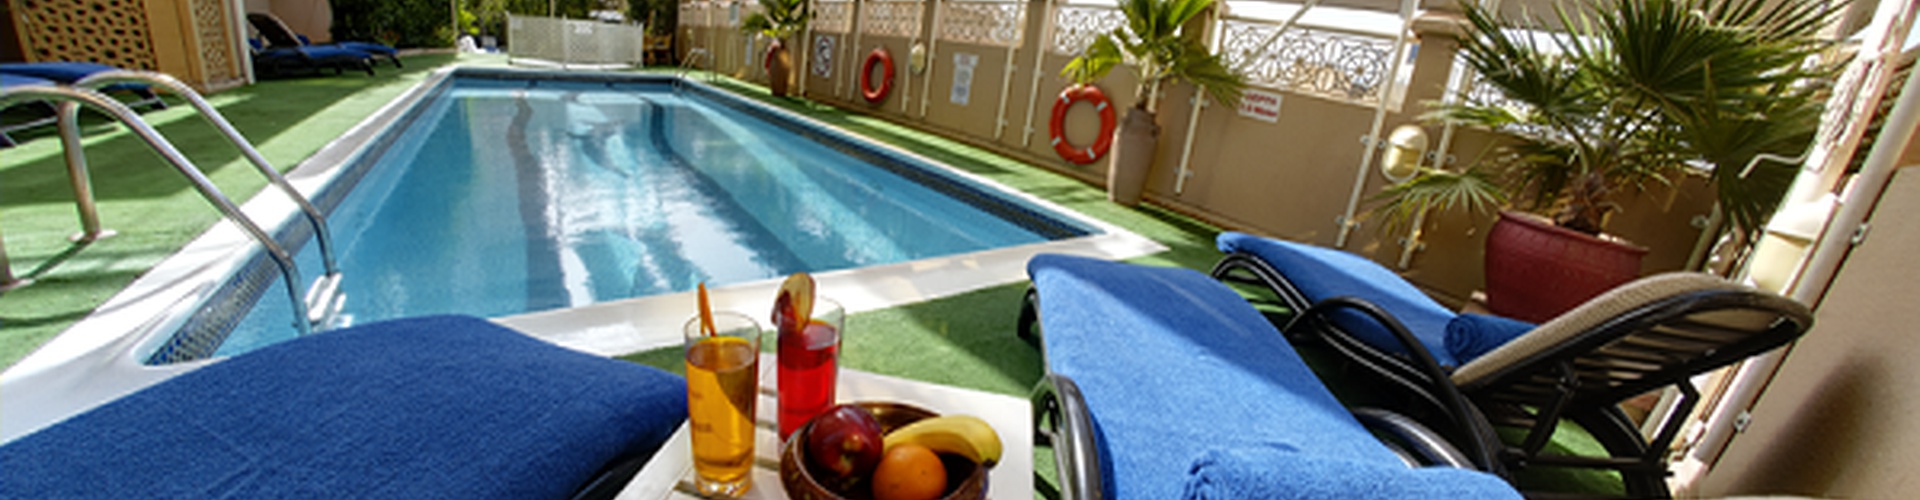 Arabian Courtyard Hotel & Spa rediseño2 - بر دبي - 